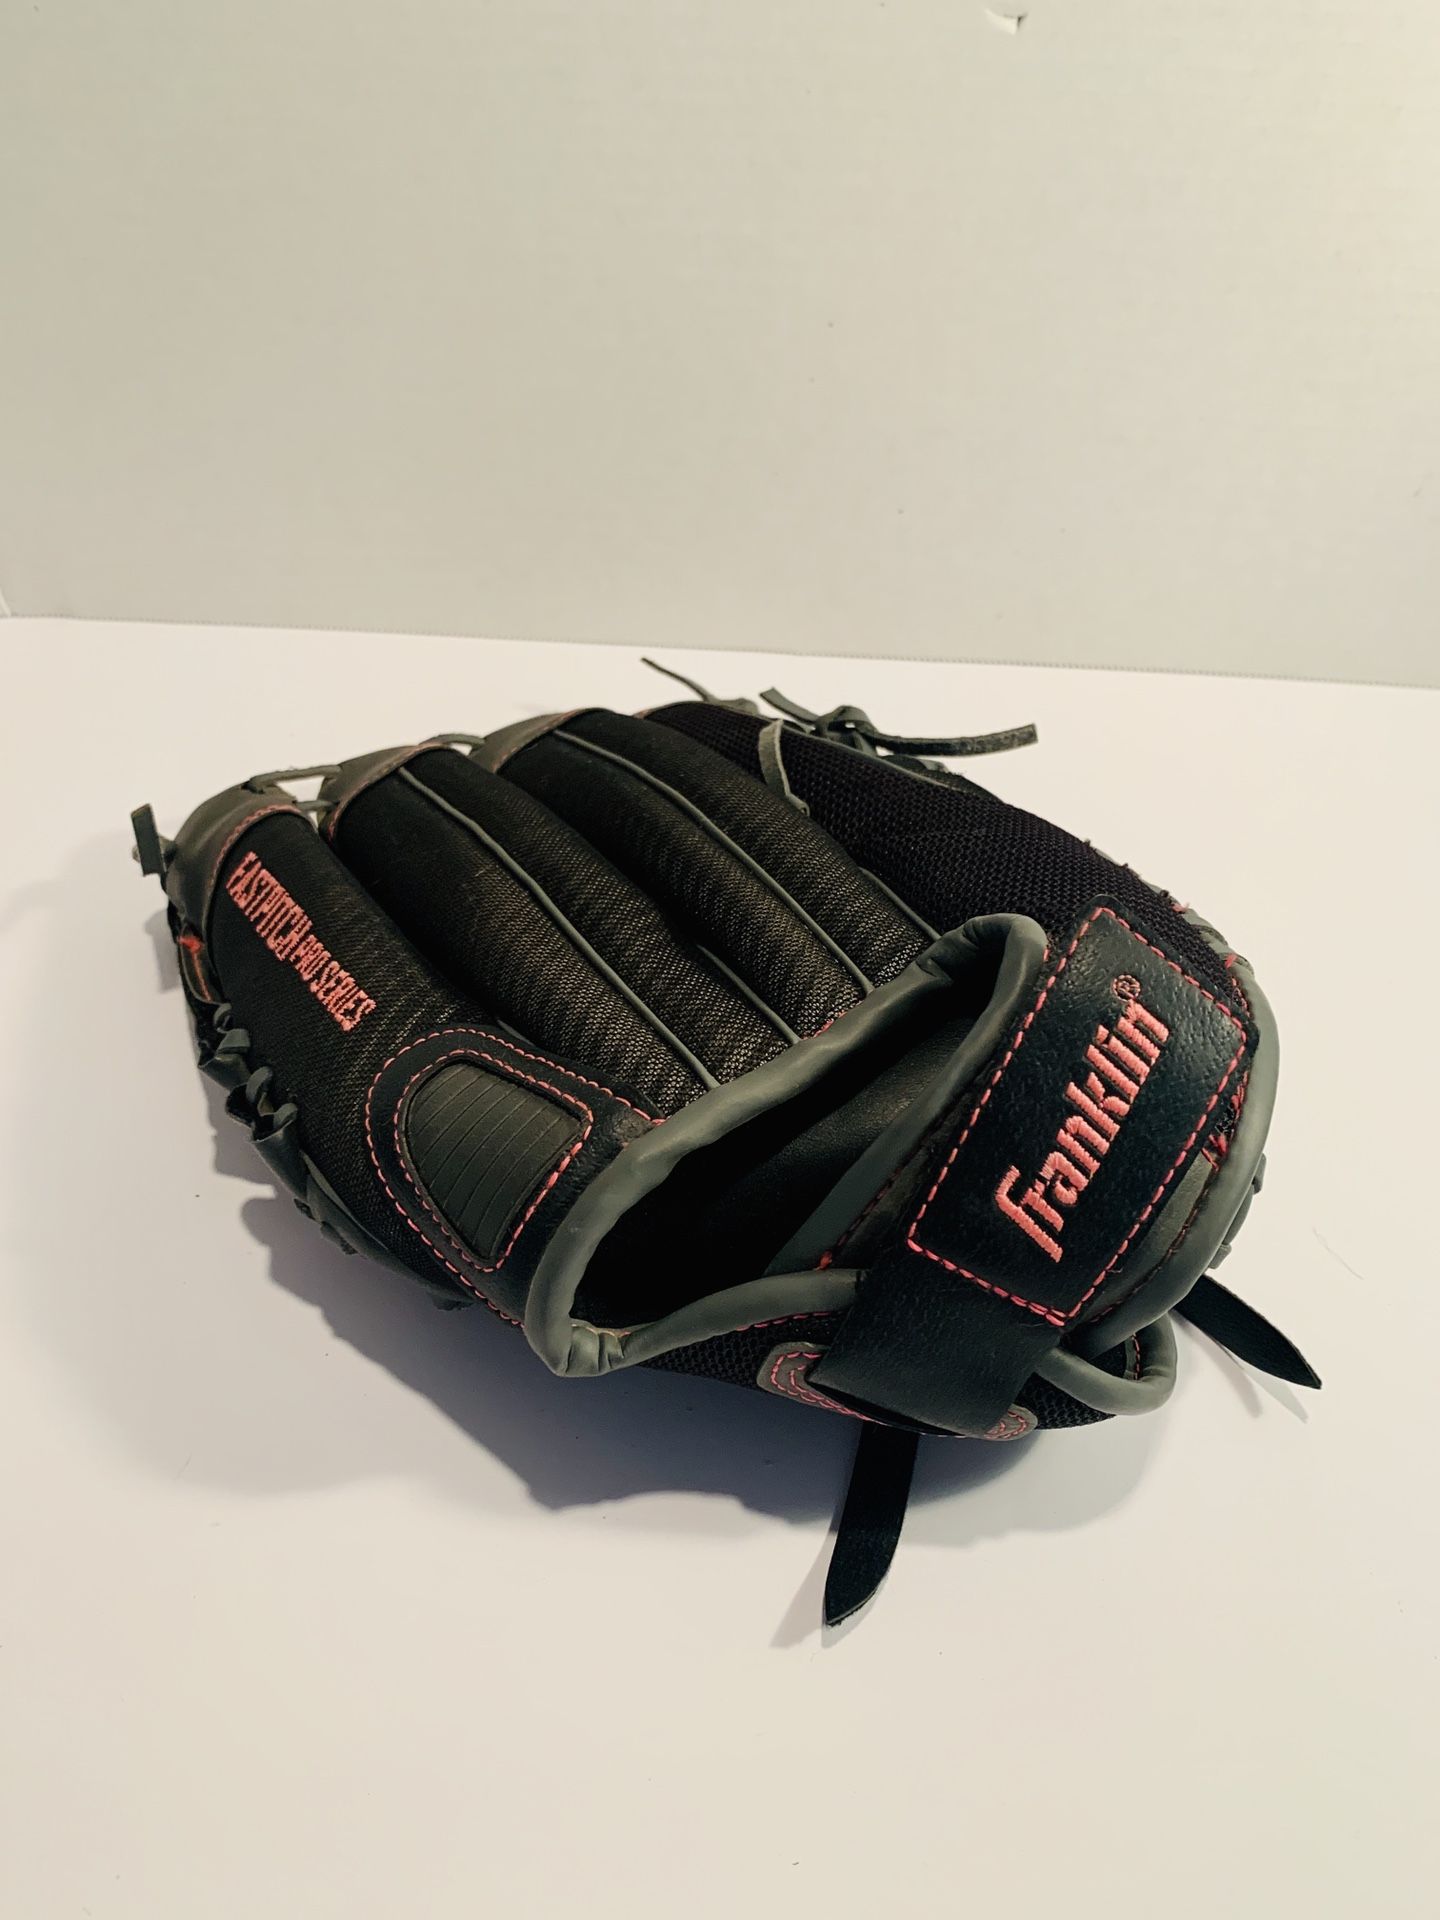 Franklin Fastpitch Pro Softball Glove - 12”